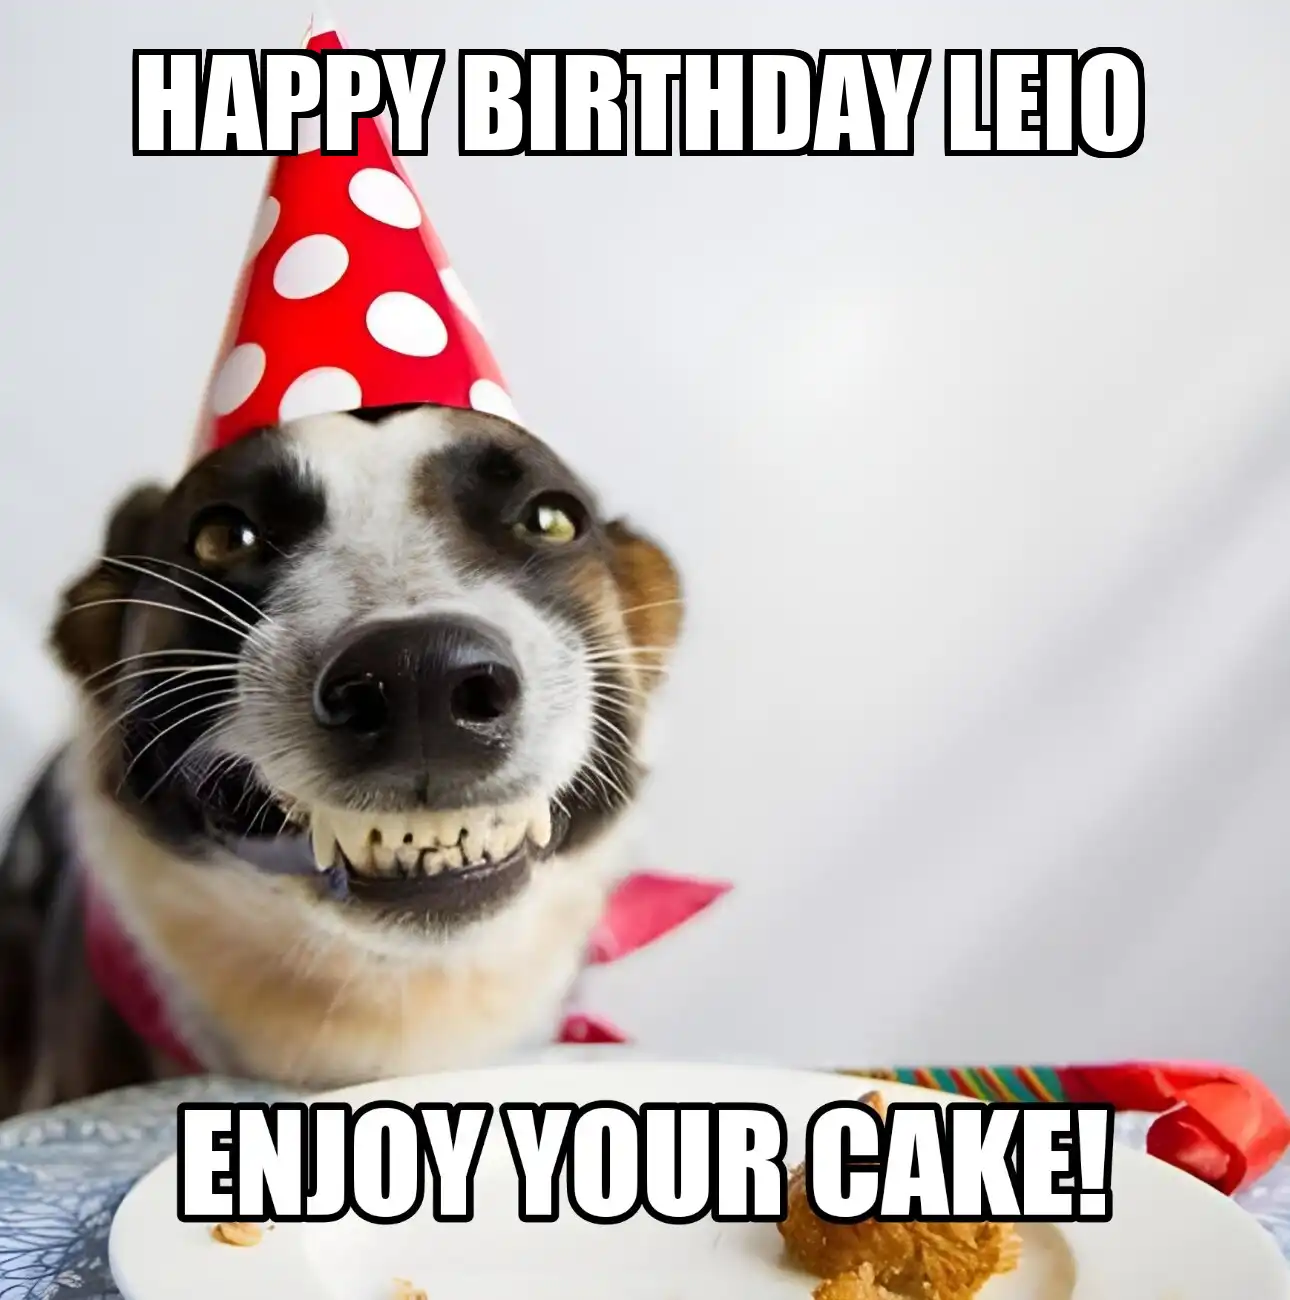 Happy Birthday Leio Enjoy Your Cake Dog Meme